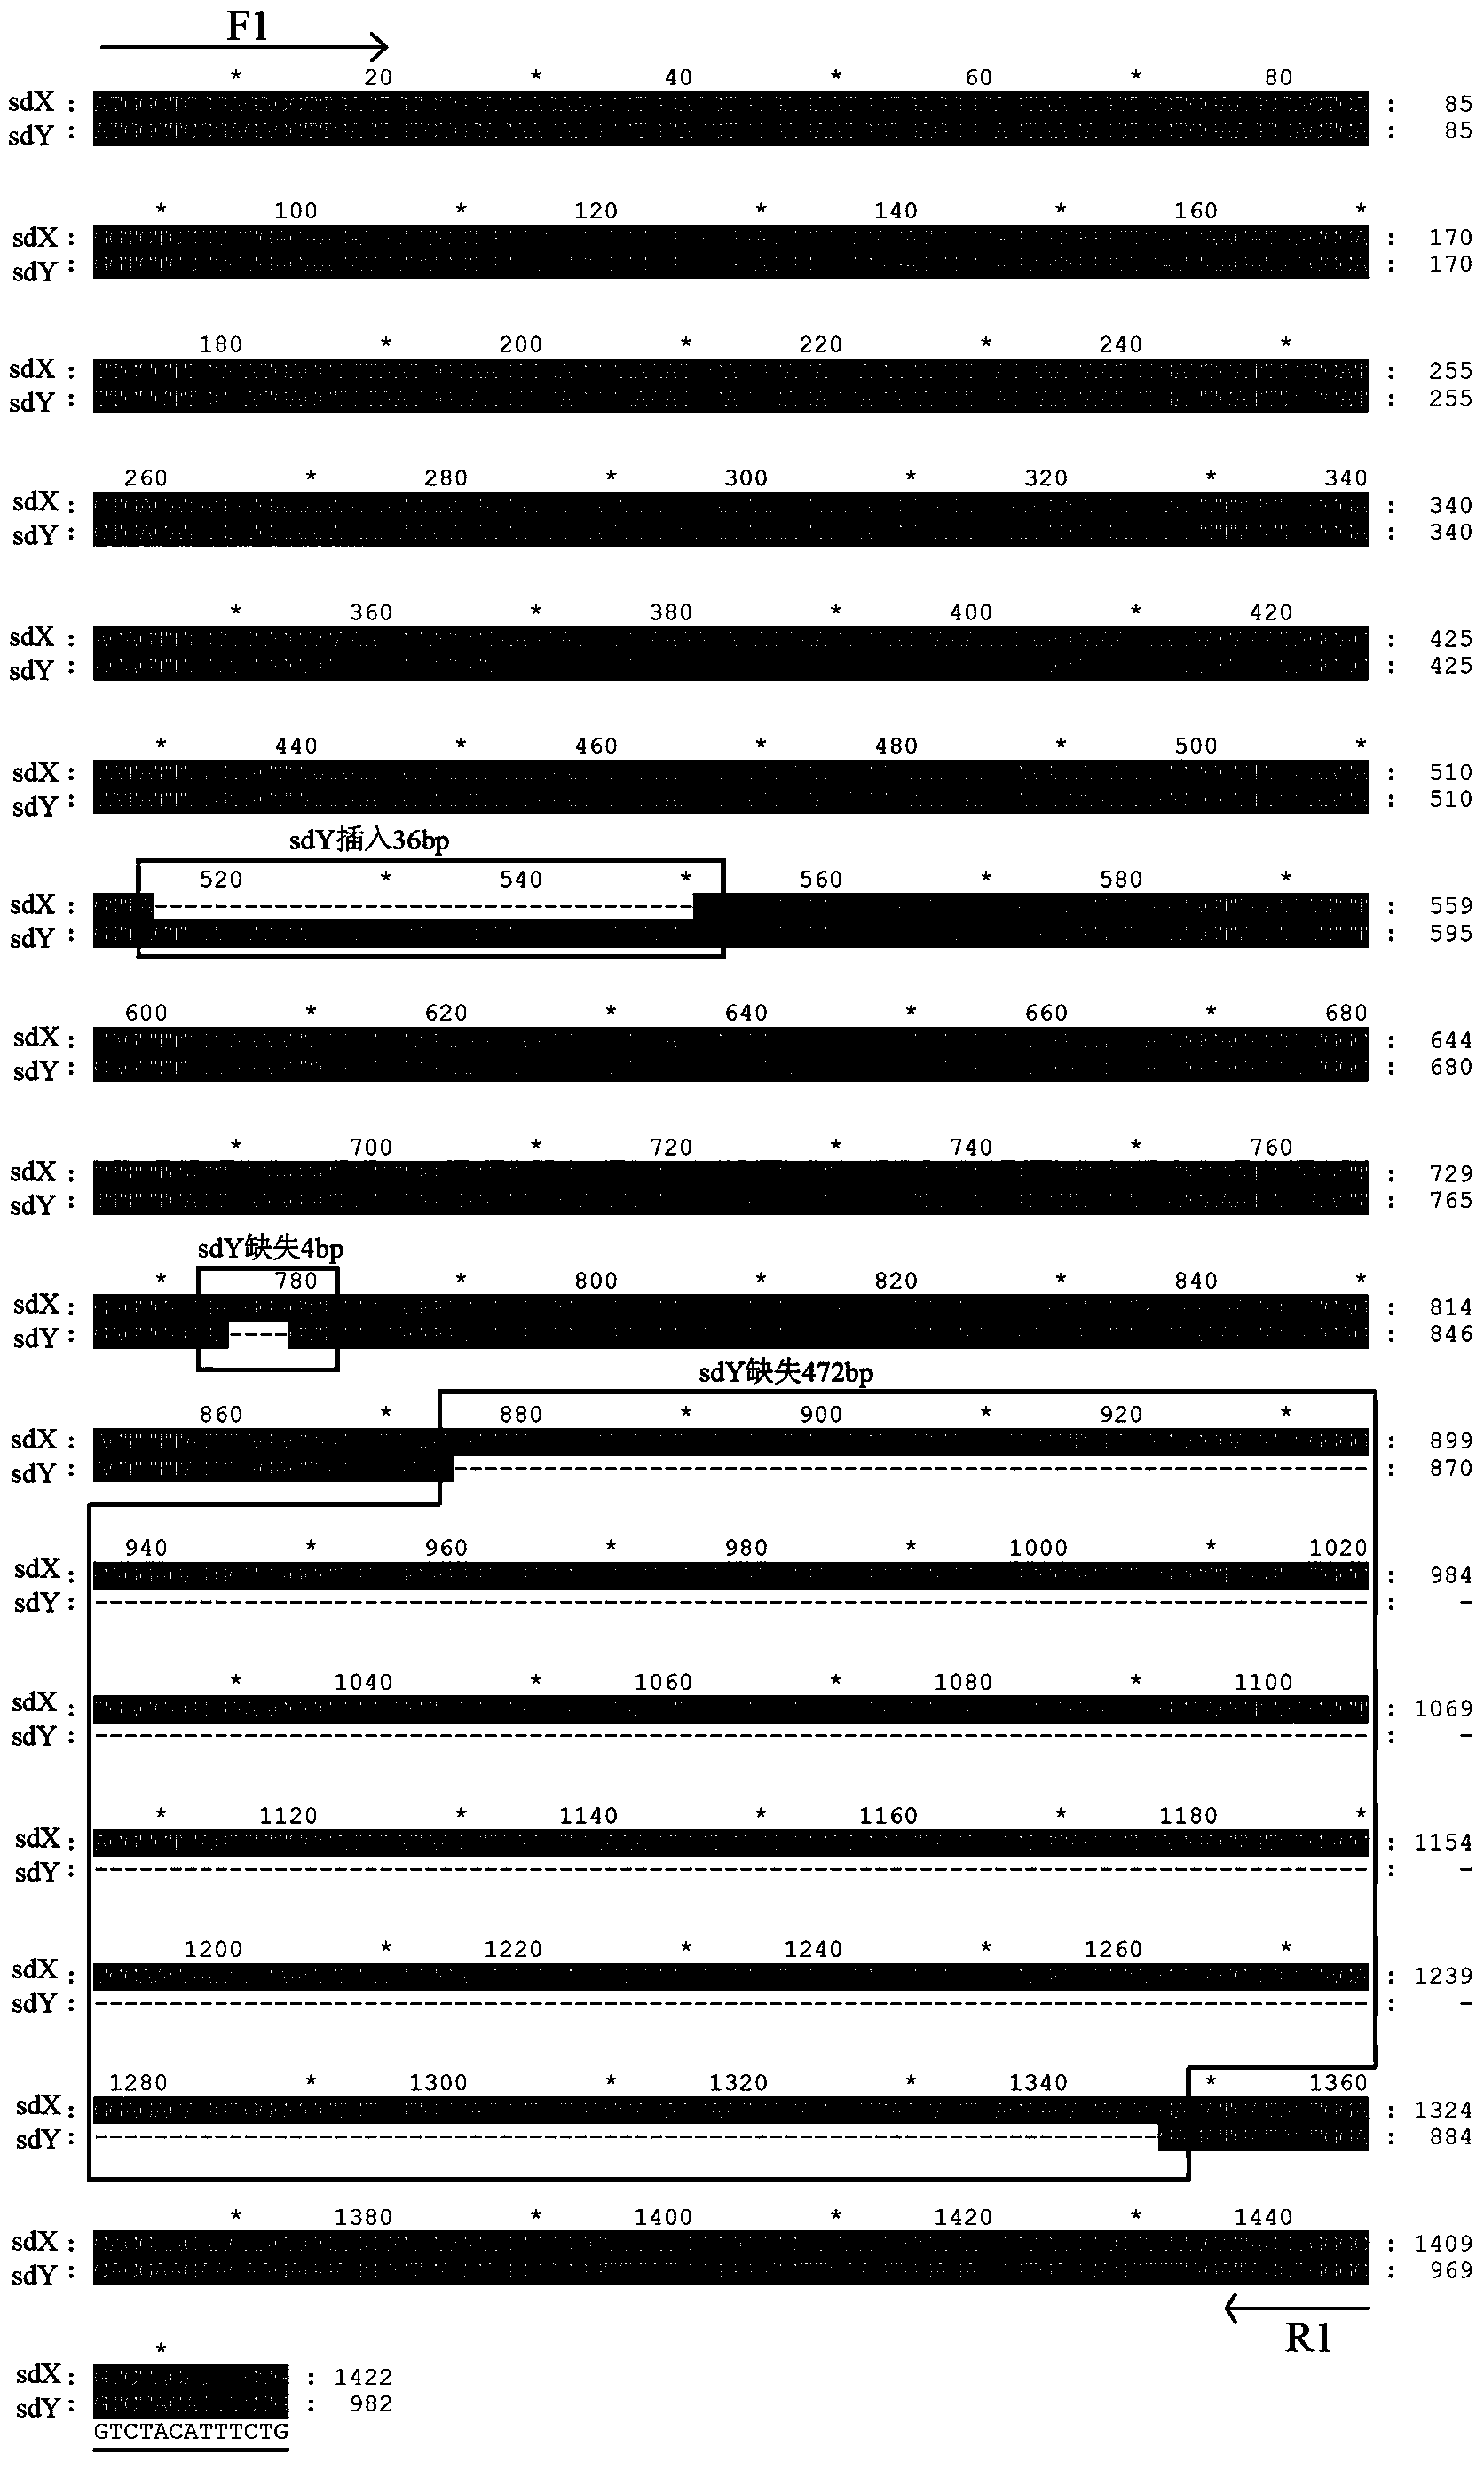 X-chromosome specific molecular marker of Nile tilapia